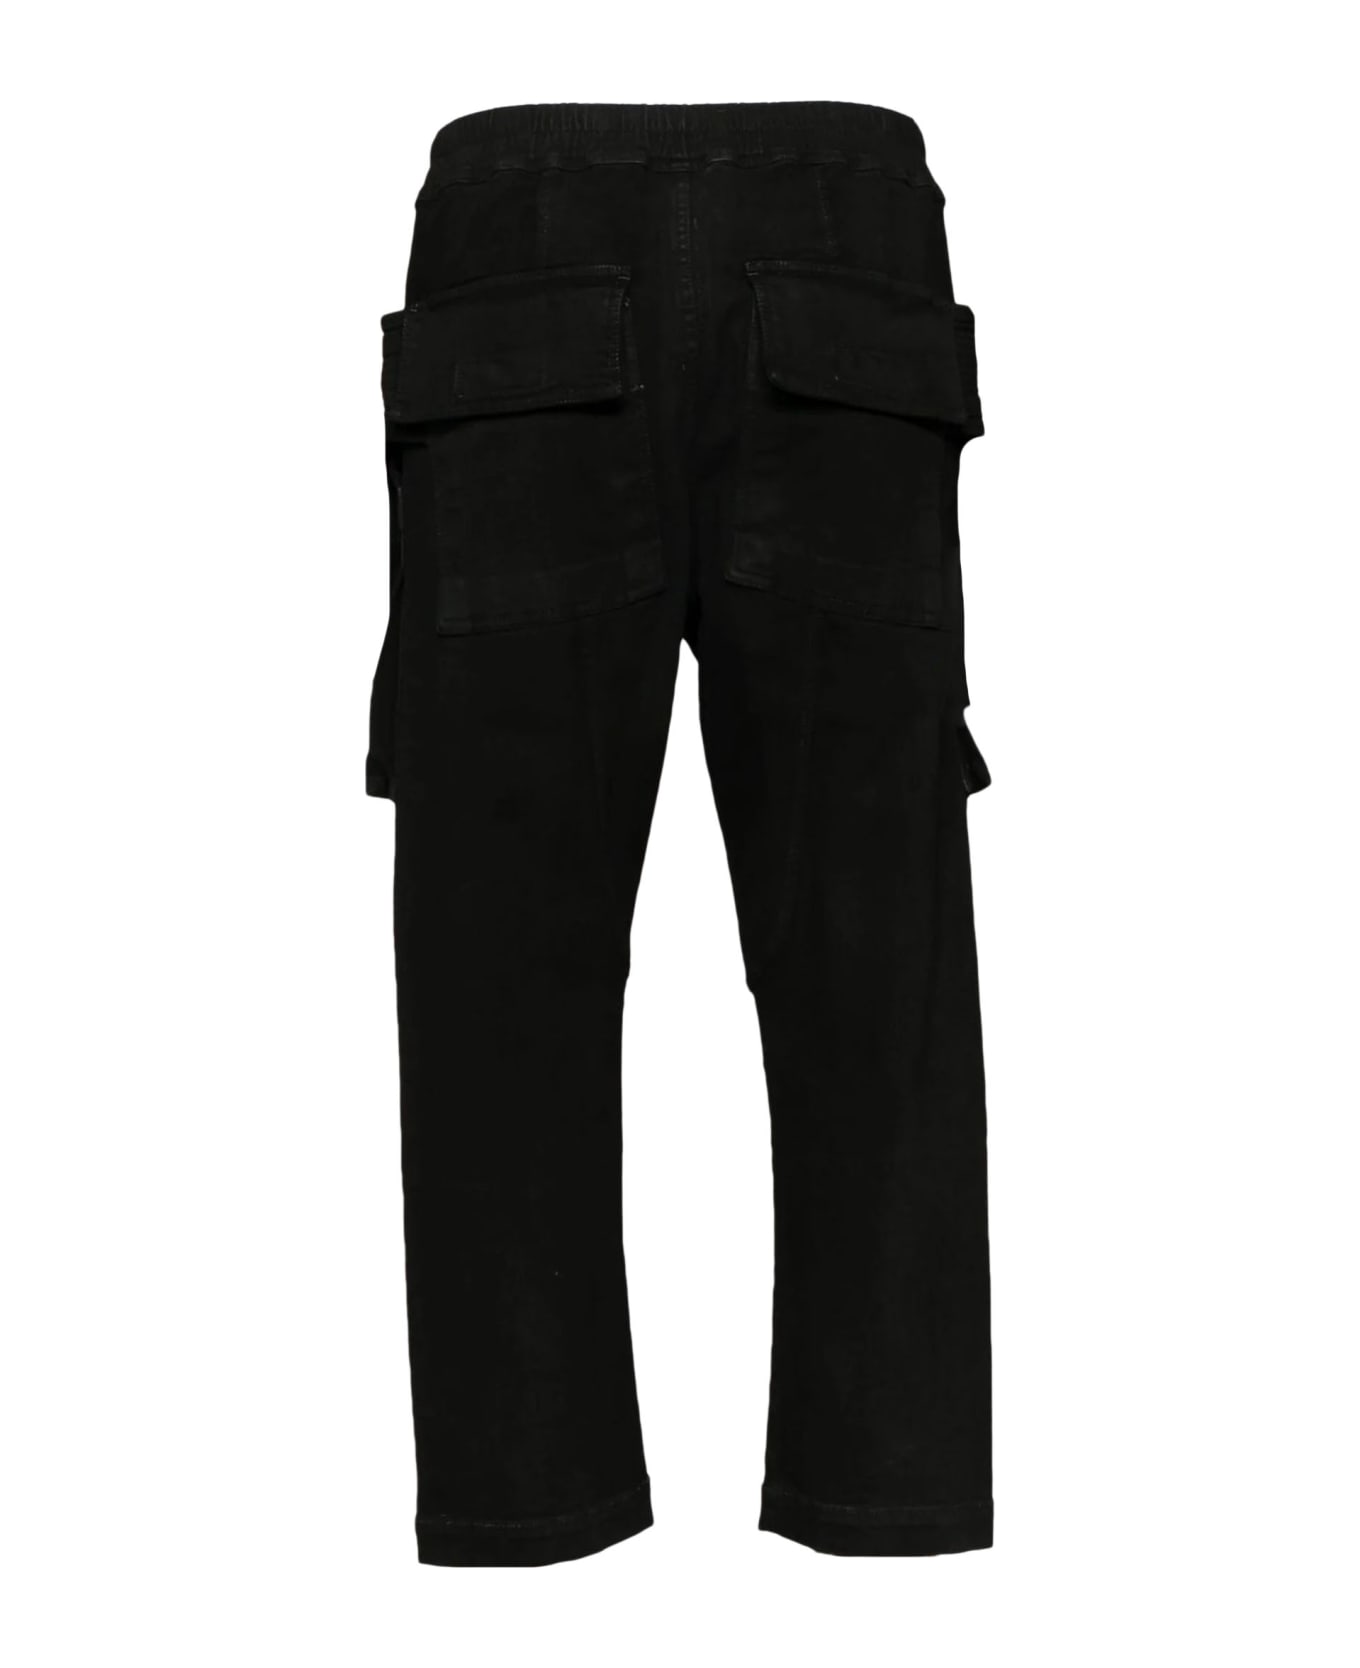 DRKSHDW Trousers Black - Black ボトムス